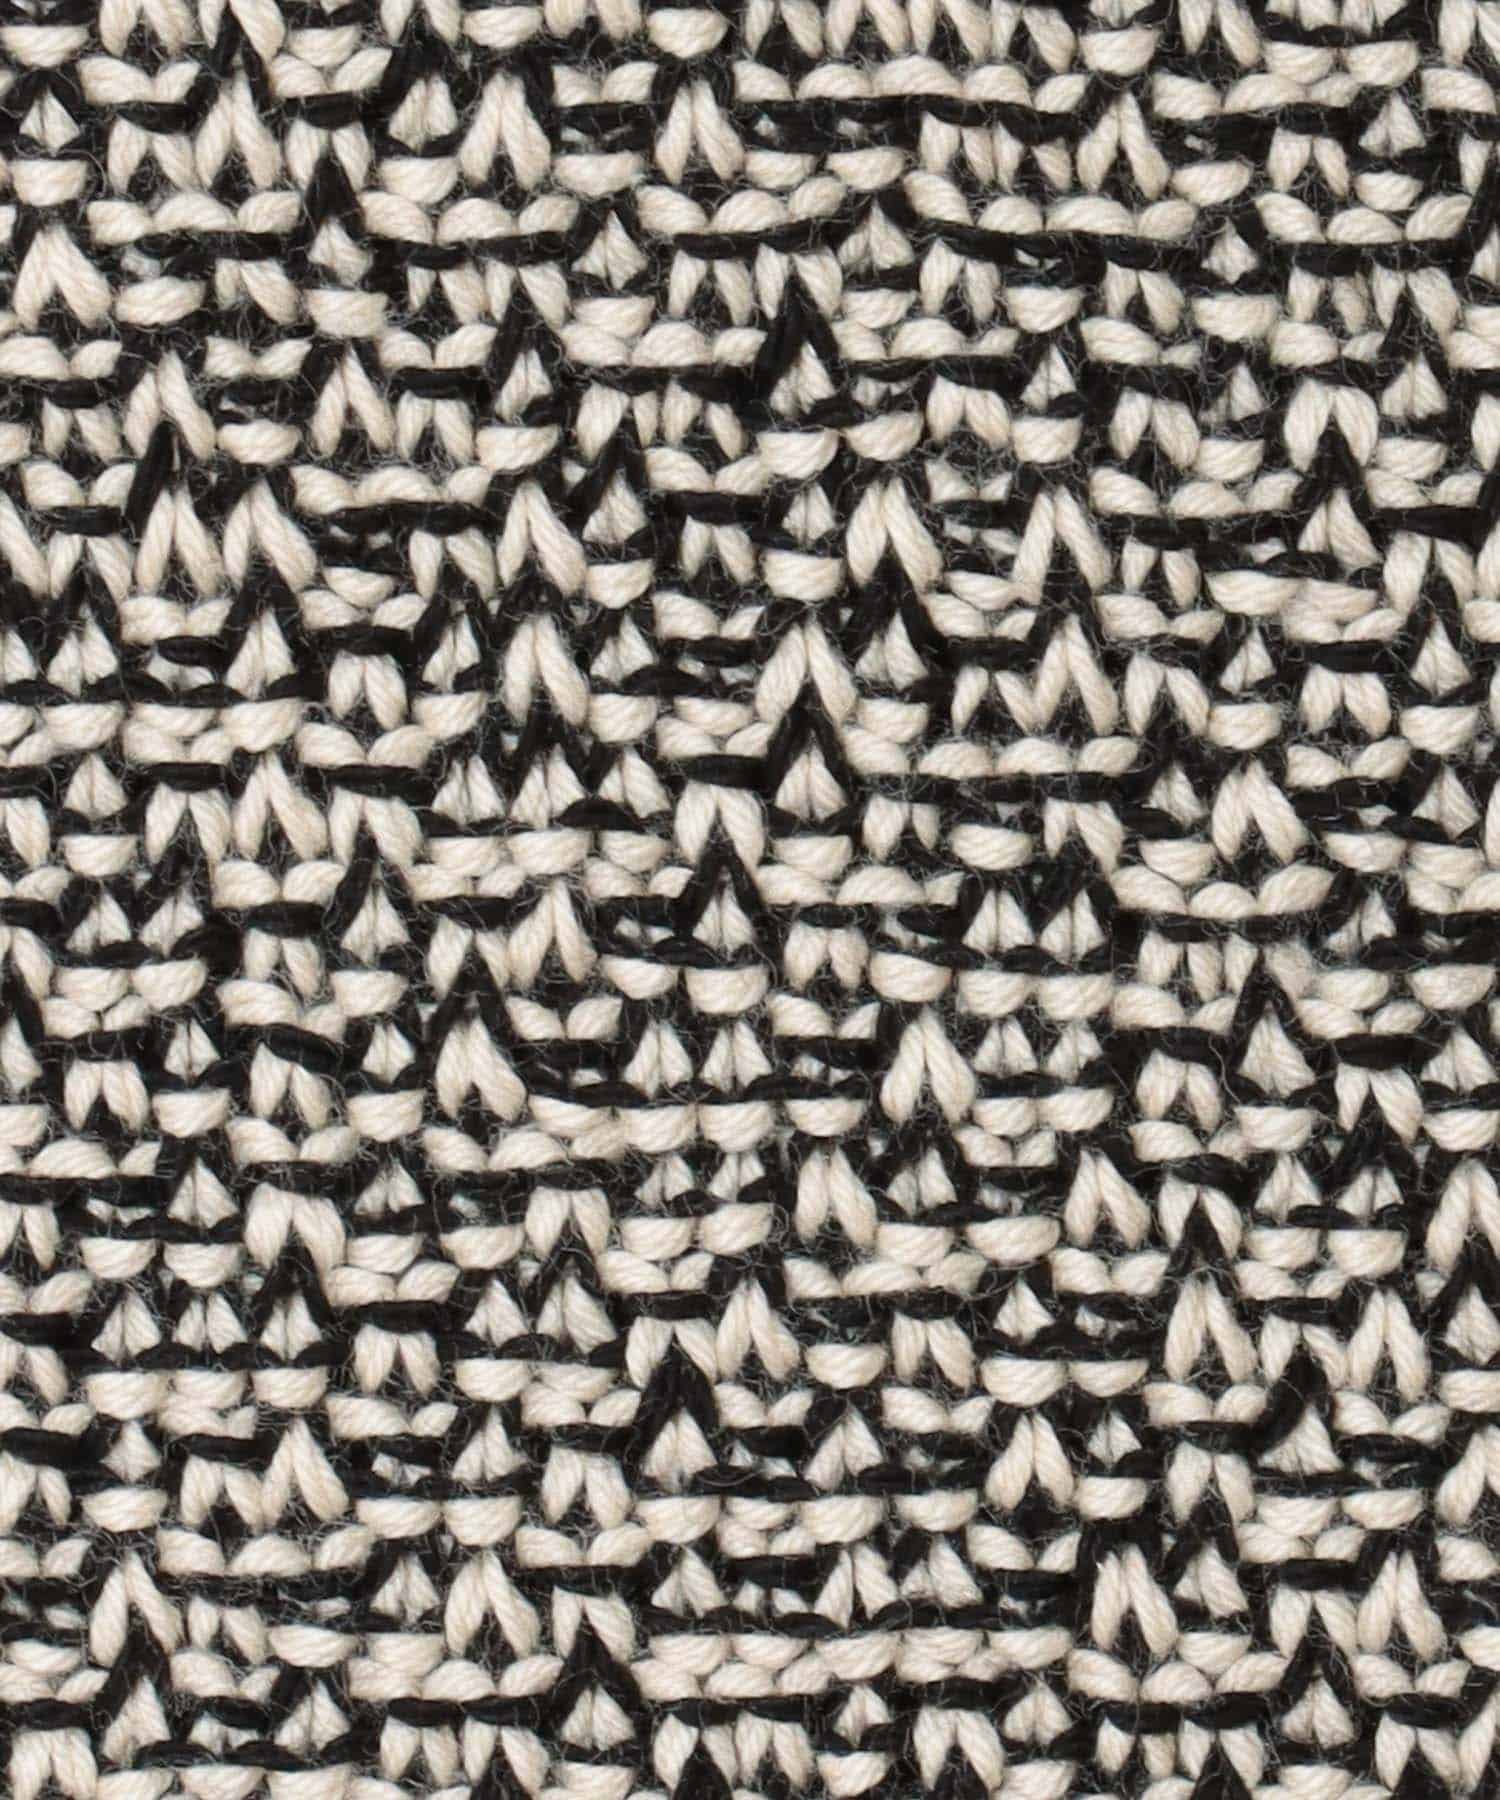 tweed knit panel flare skirt